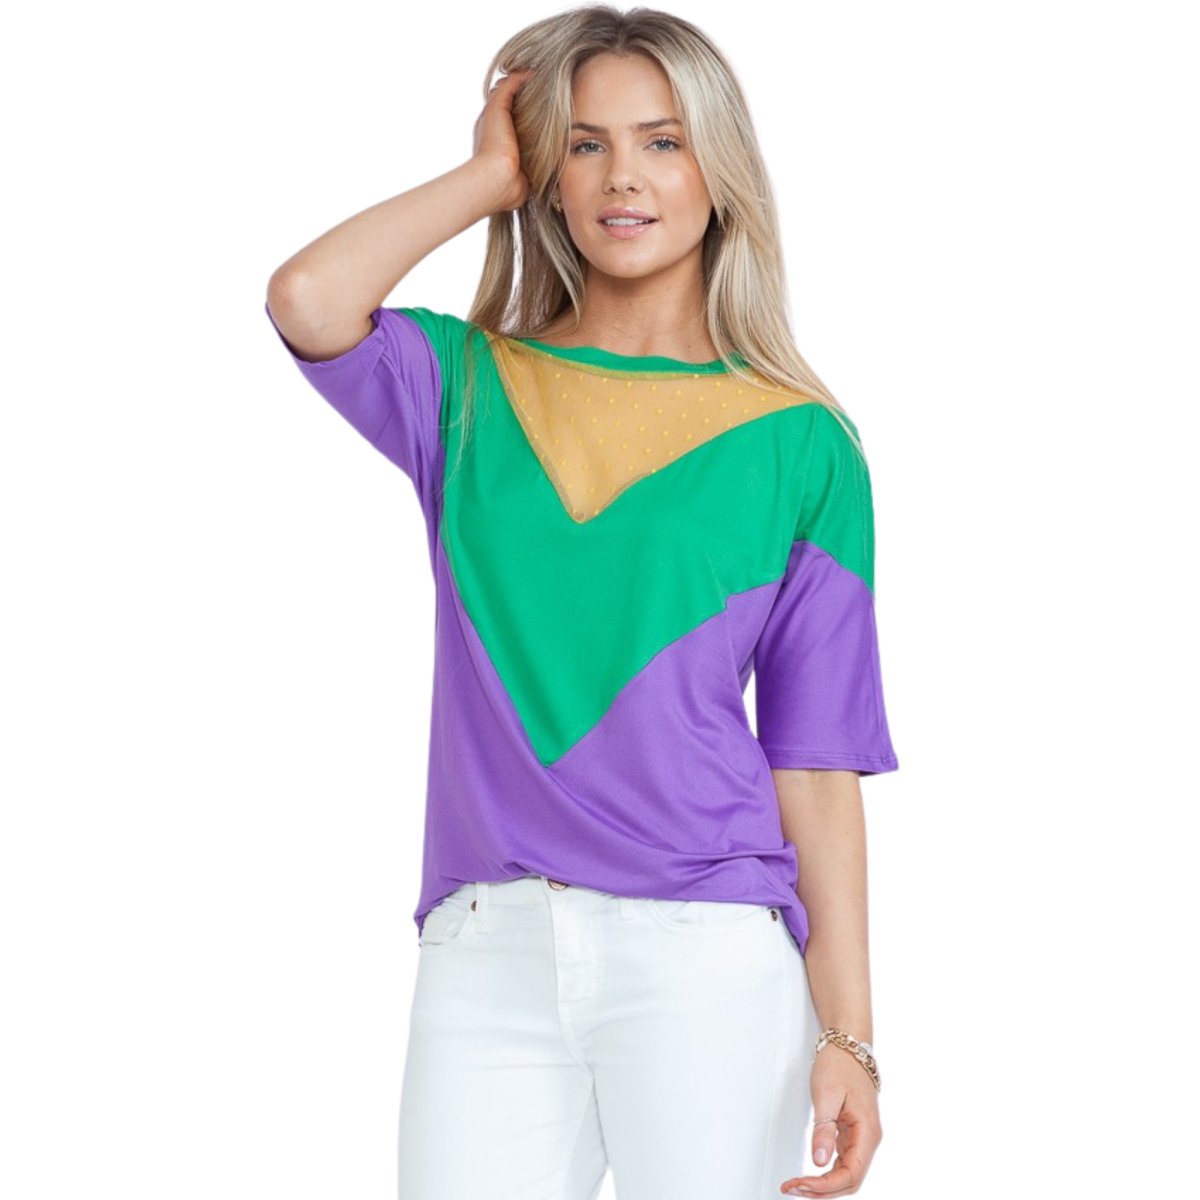 Mardi Gras Green & Purple Color Block Short Sleeve Tunic Top - Mardi Gras Apparel